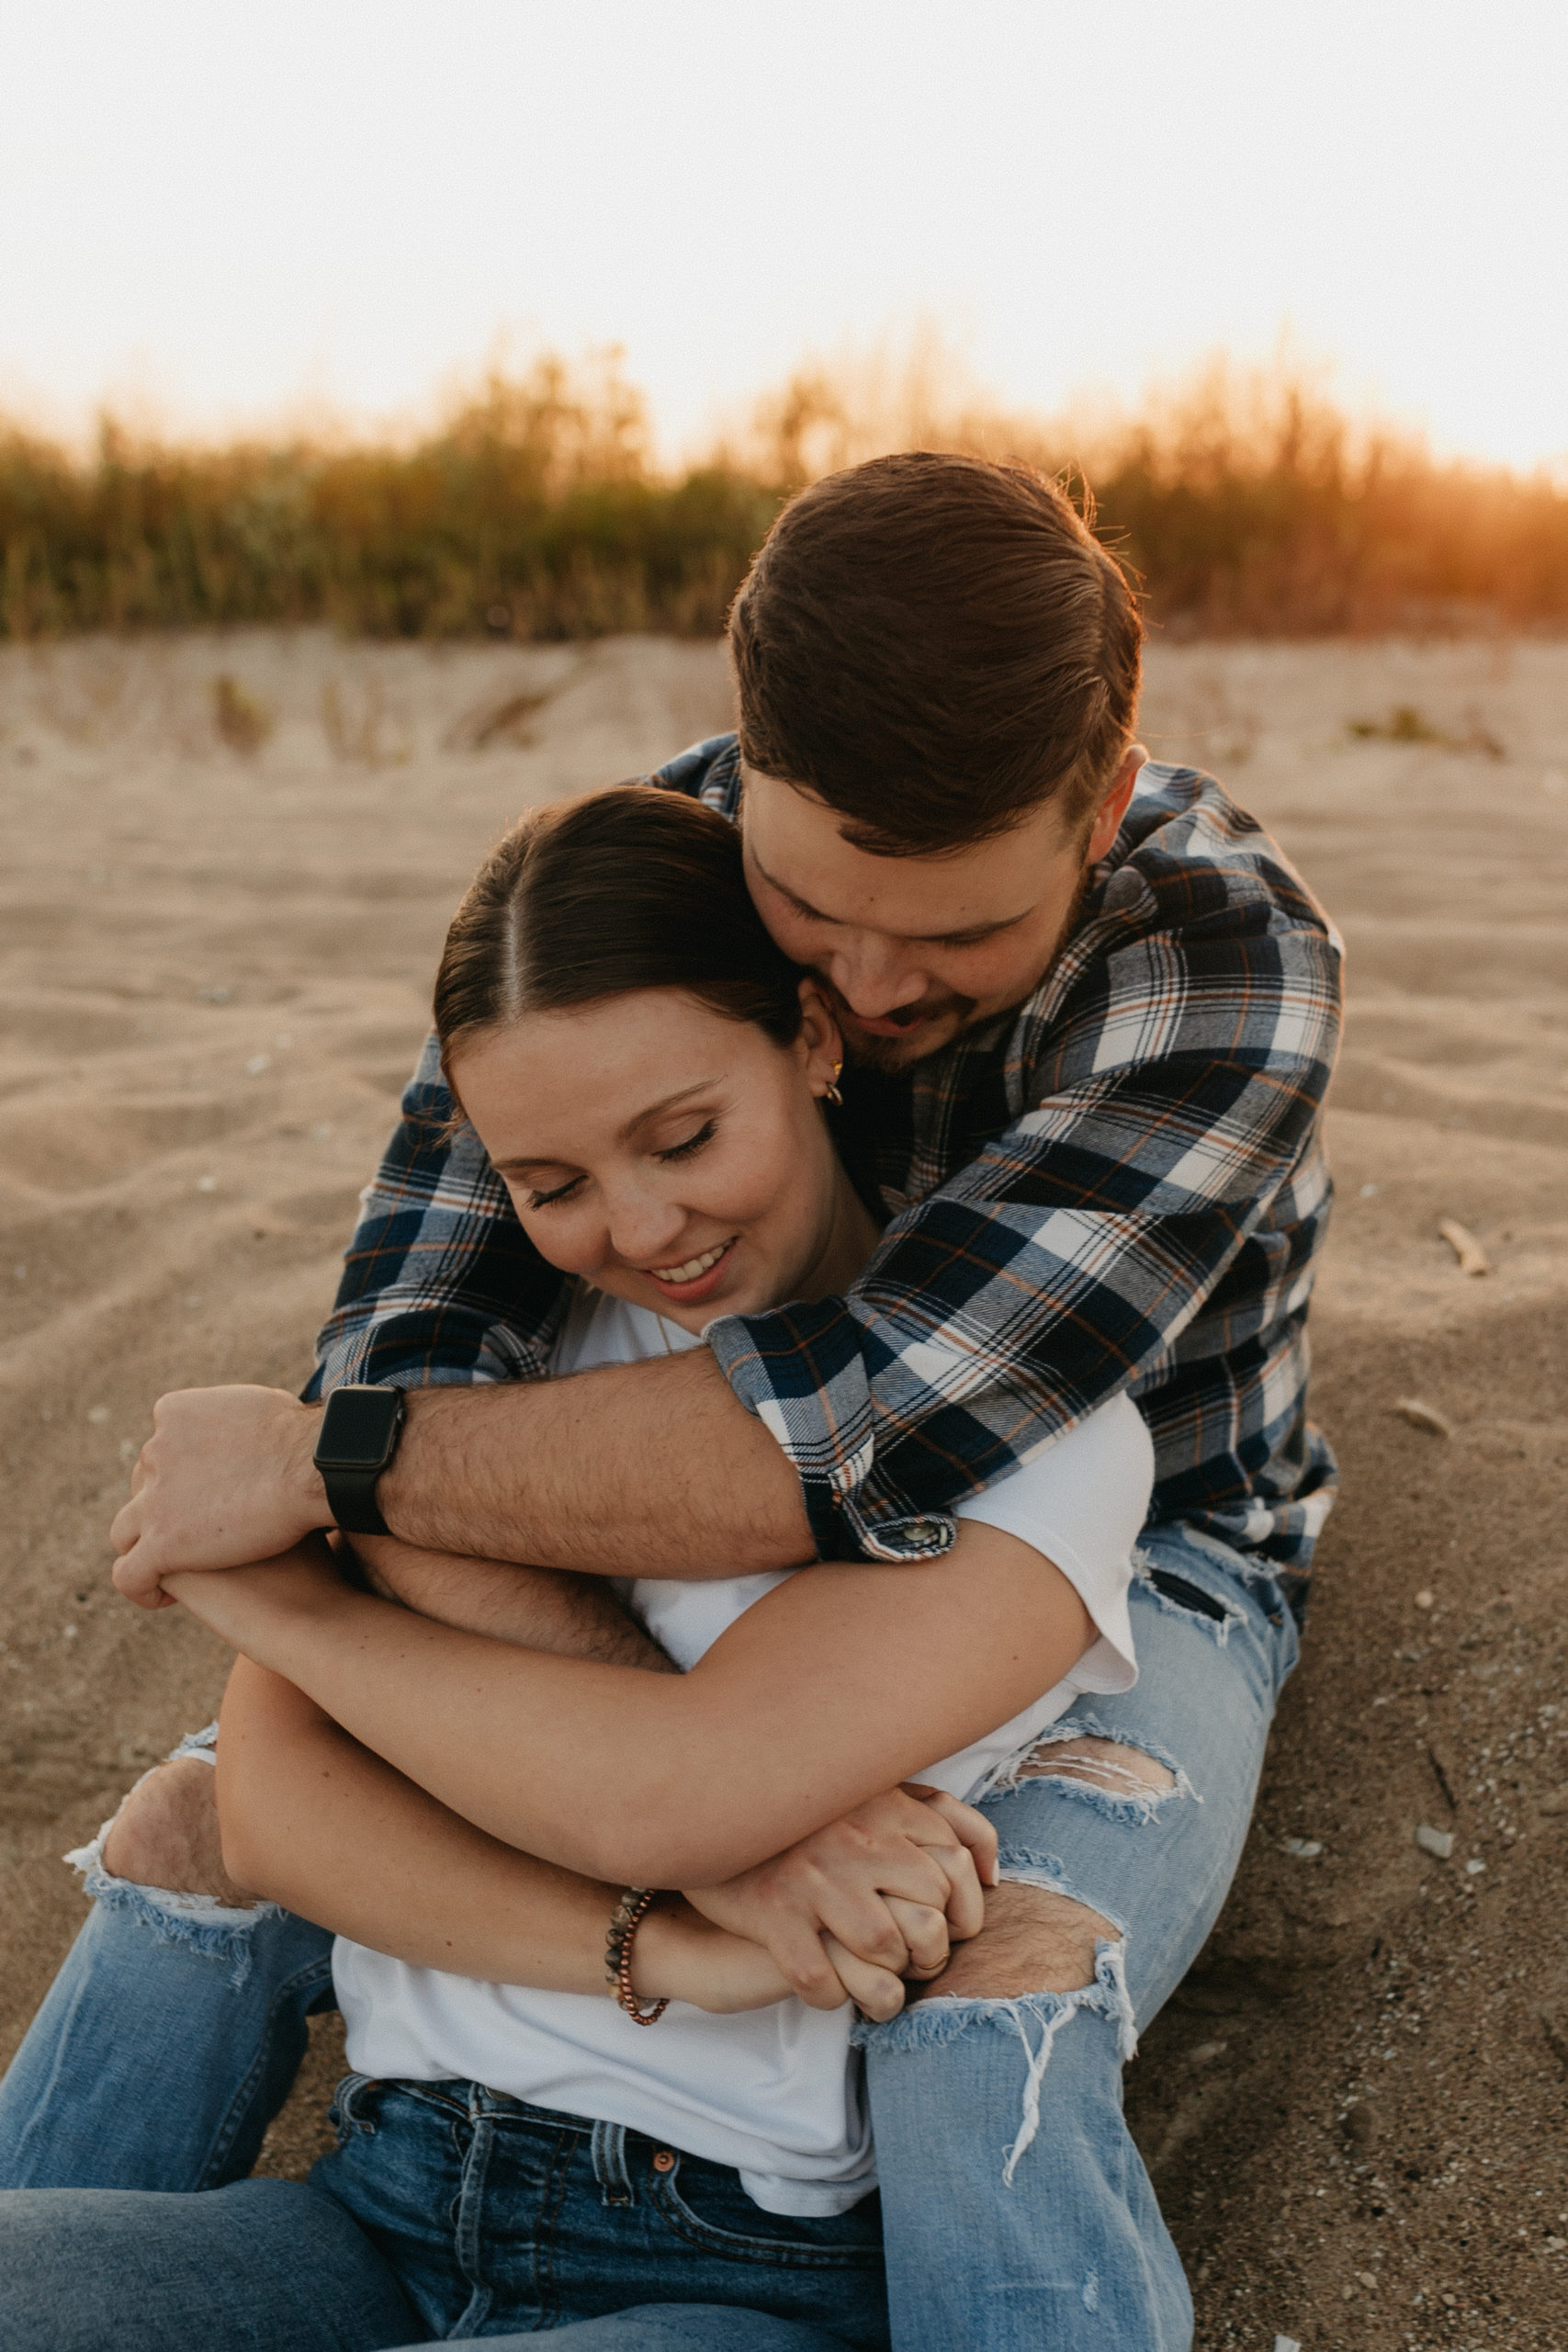 Couple embracing on a sandy beach